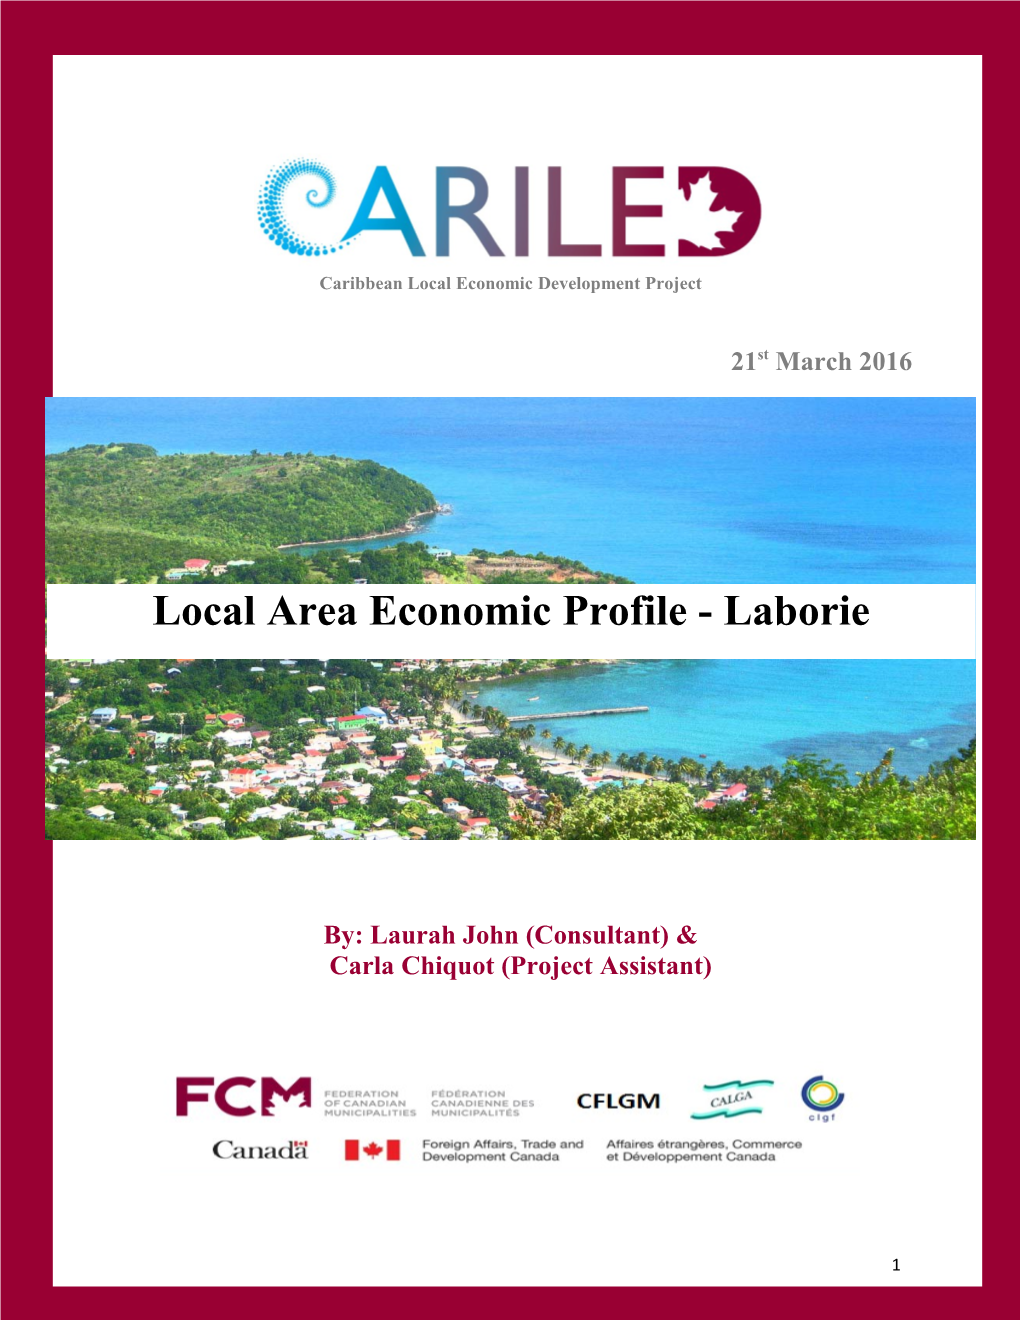 Caribbean Local Economic Development Project